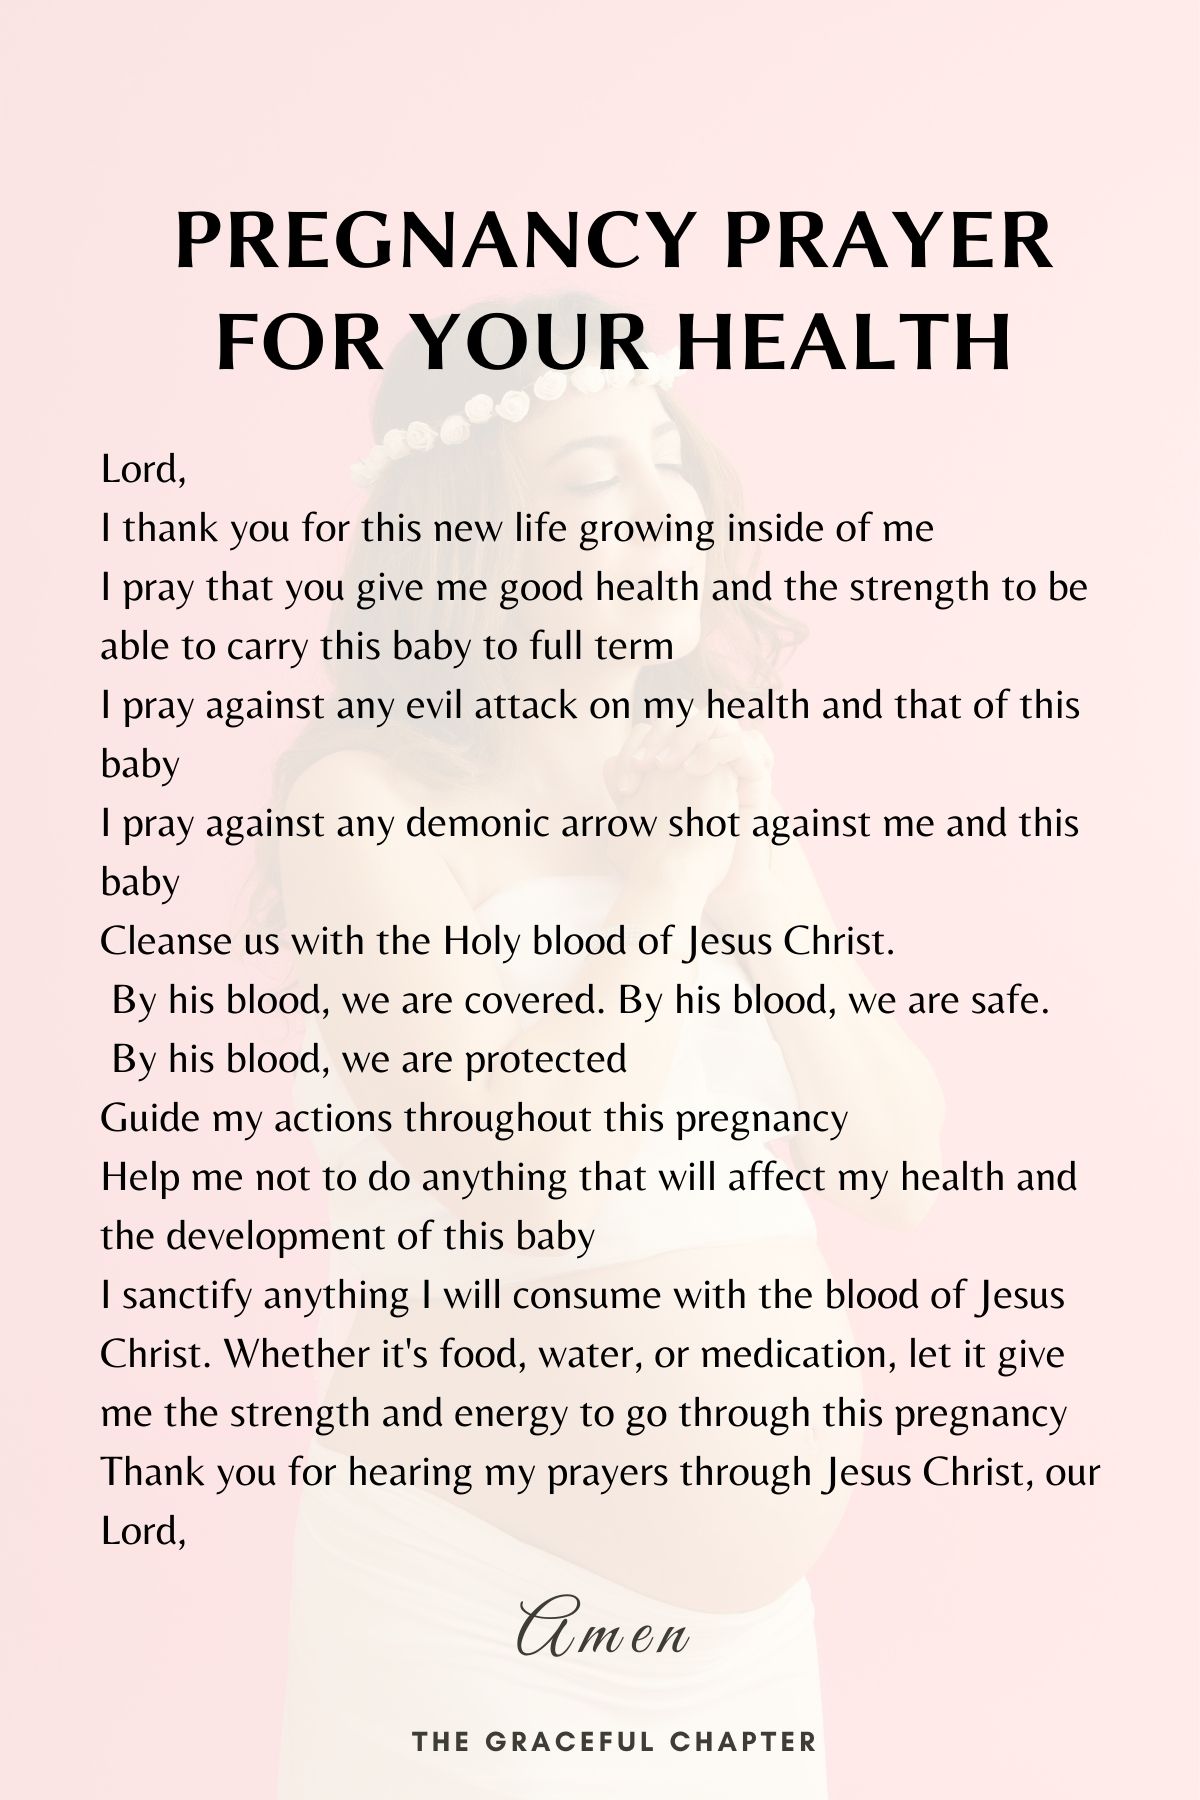 Prayers for pregnant women - Pregnancy prayer for your health